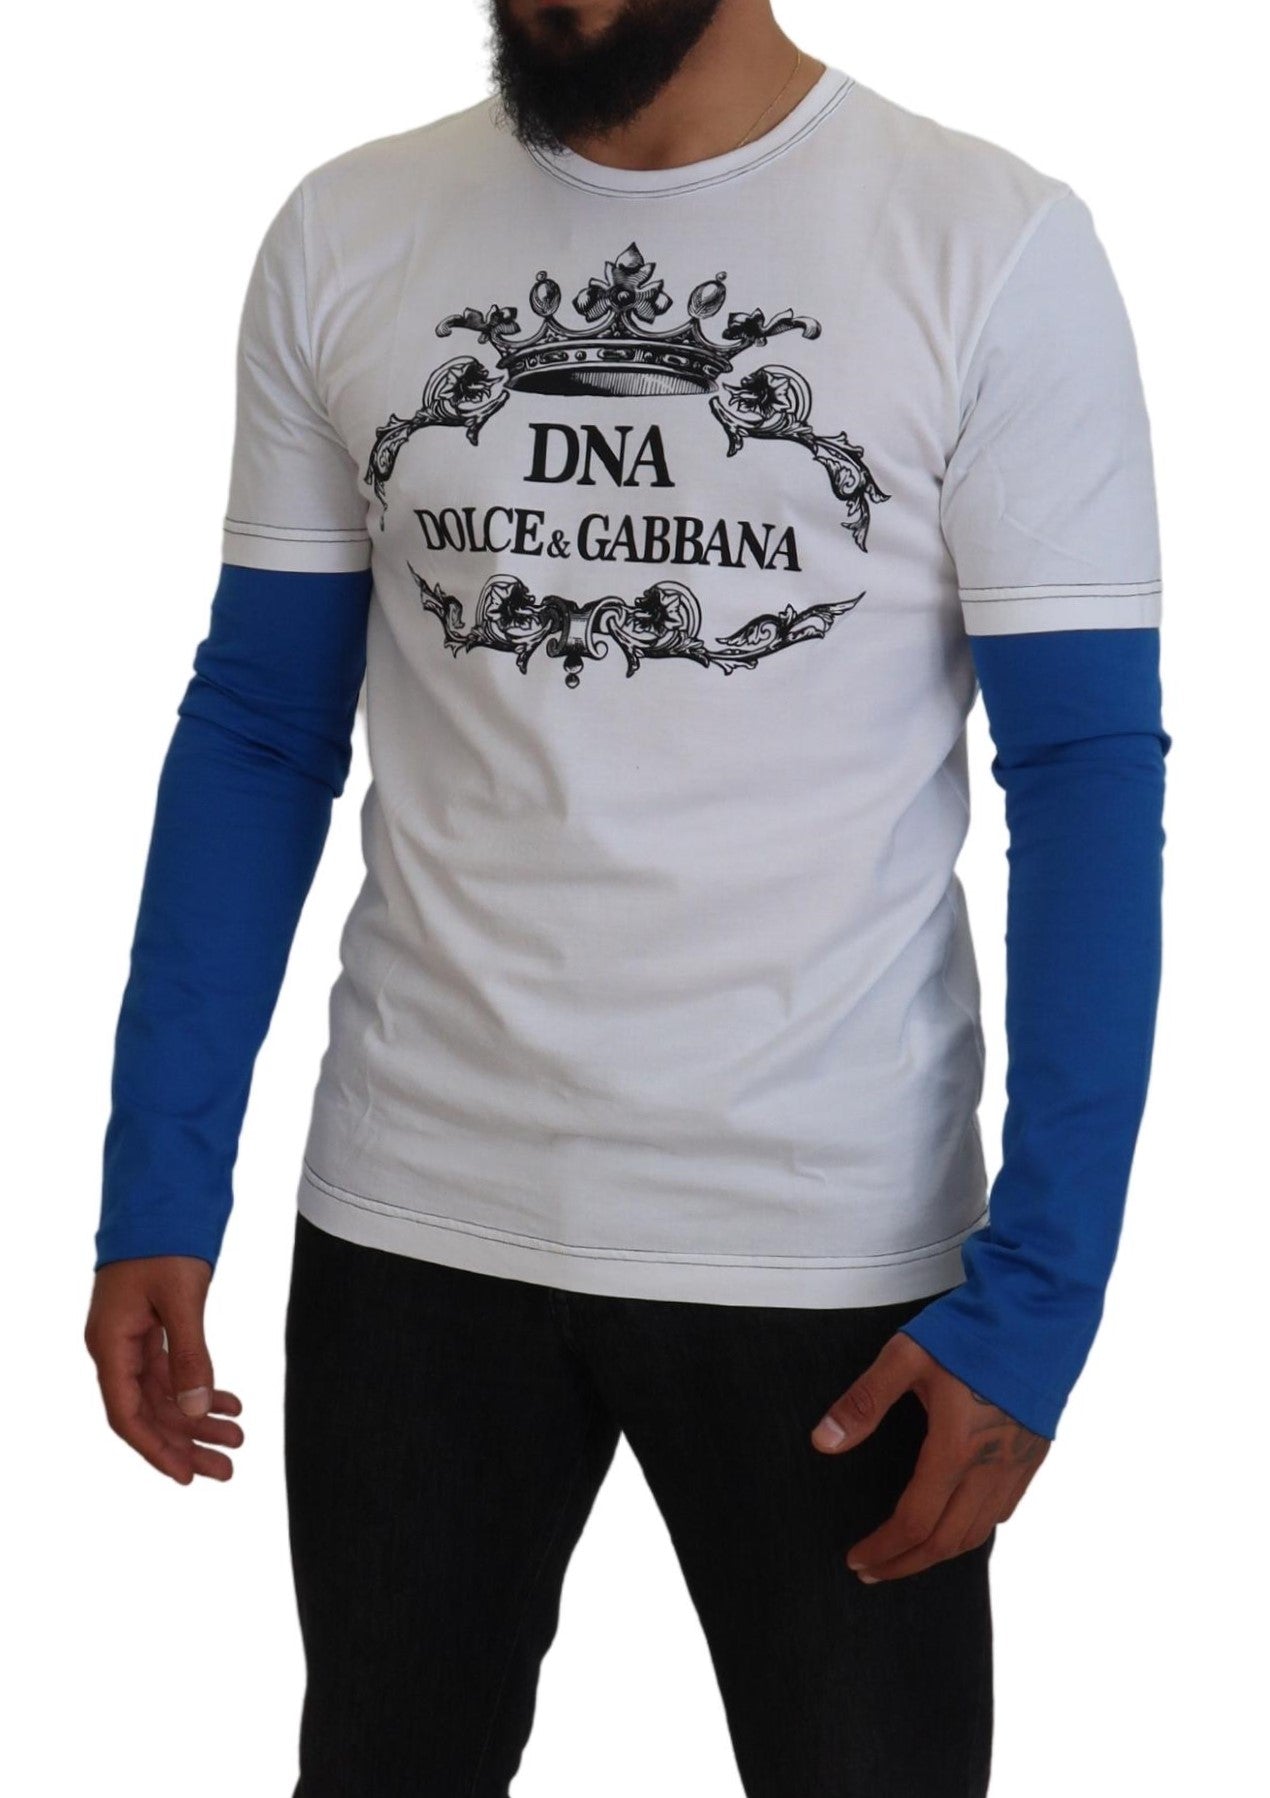 Fashionsarah.com Fashionsarah.com Dolce & Gabbana Blue White DNA Crewneck Pullover Sweater